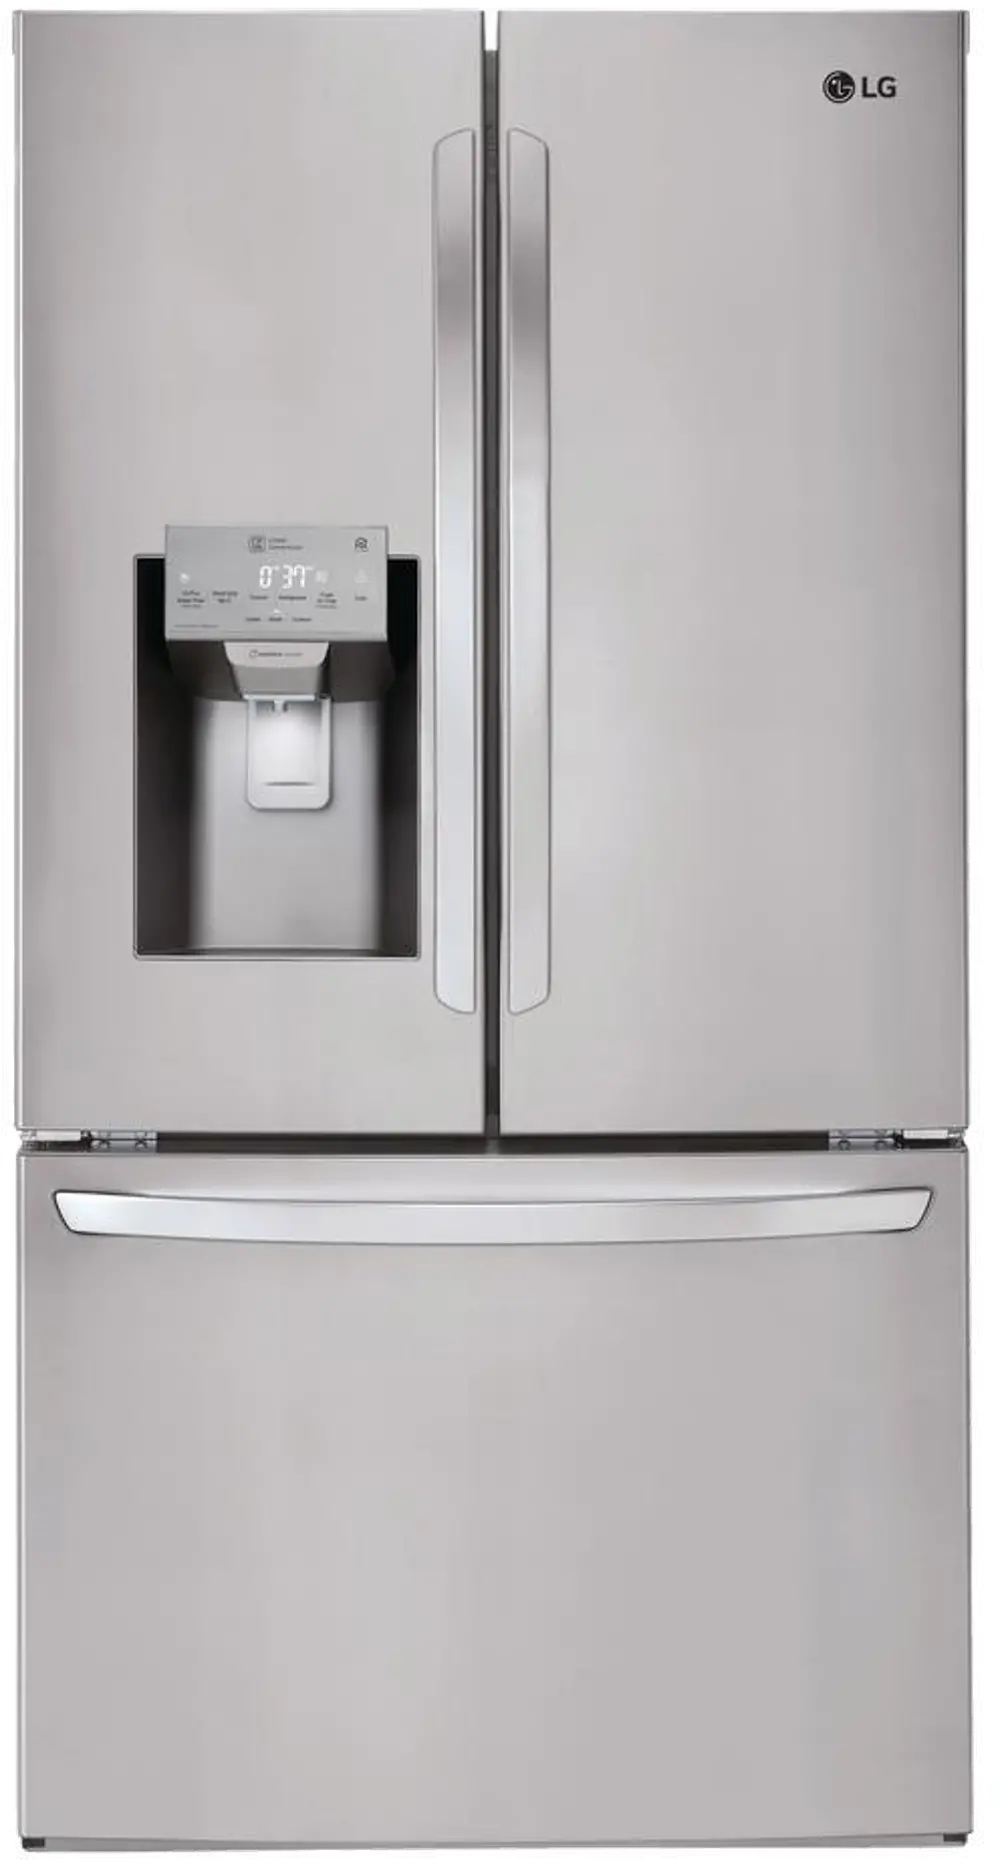 LFXS26973S LG 26.2 cu ft French Door Refrigerator - Stainless Steel-1